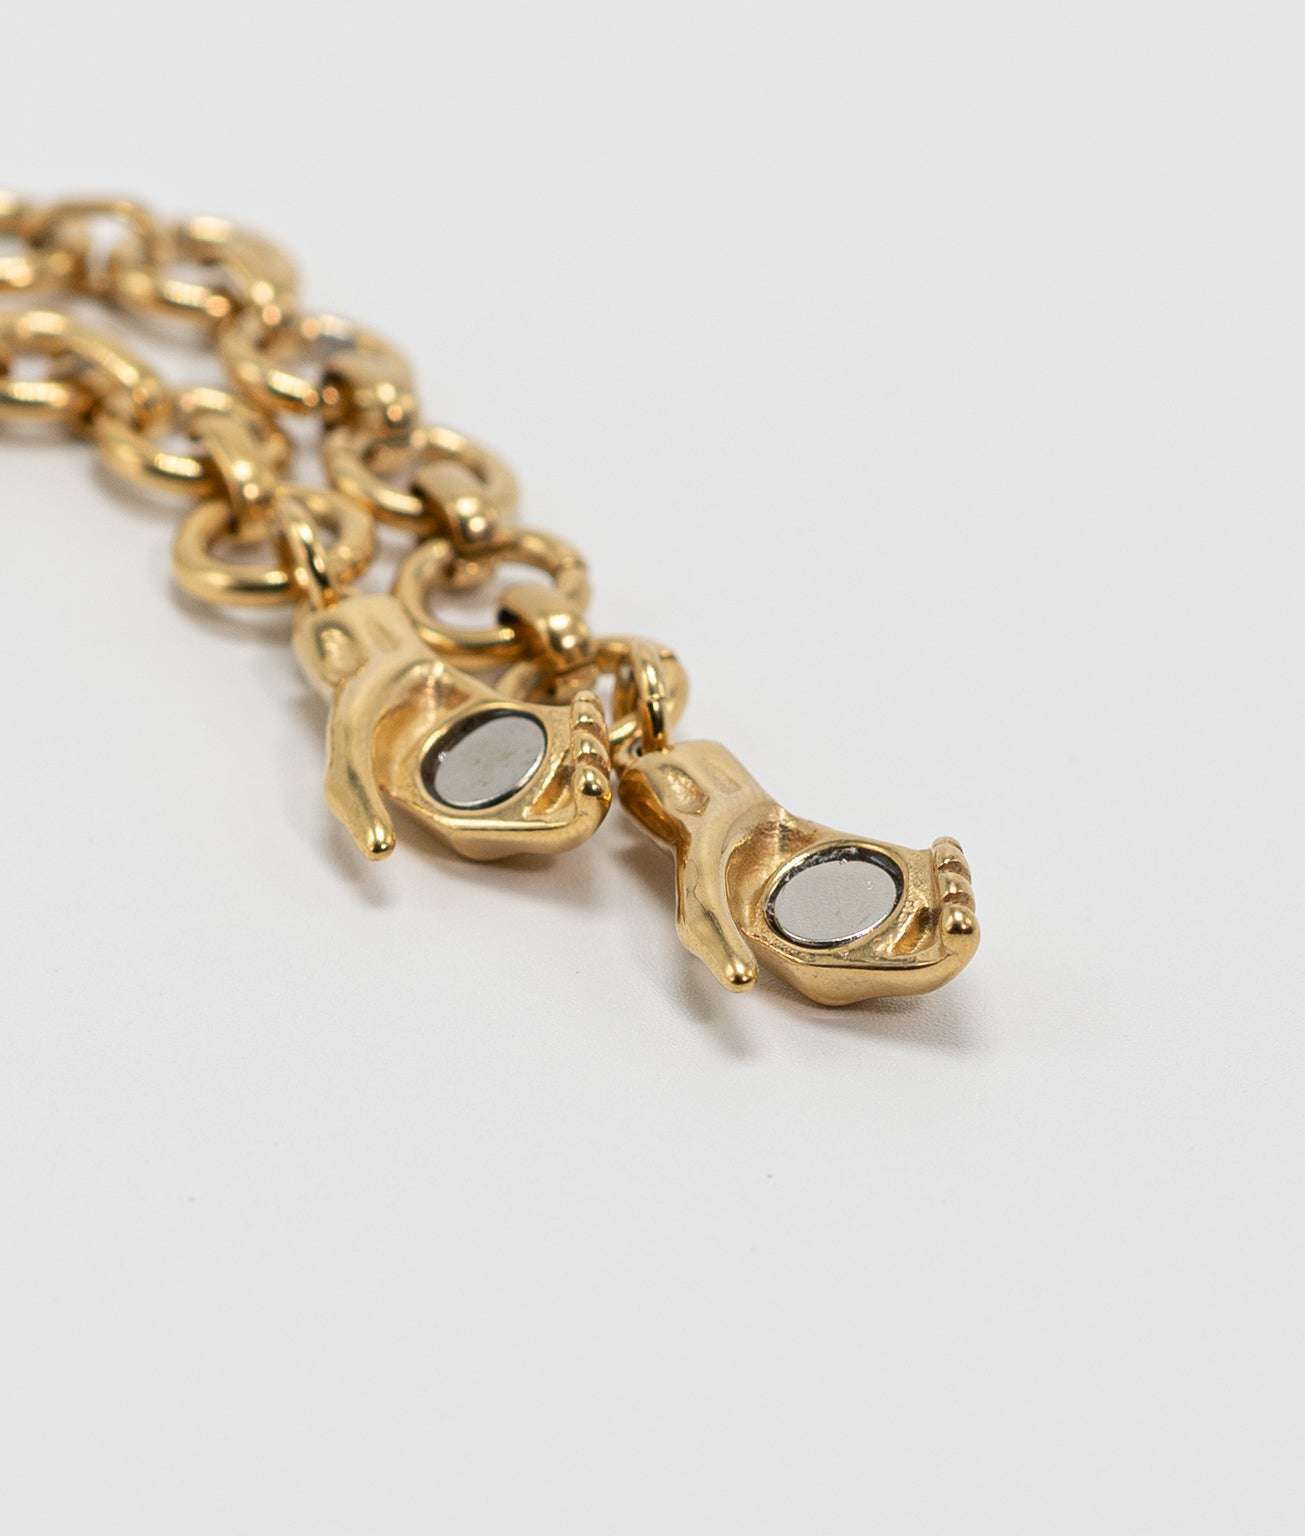 Rolo Chain Hug Necklace and Bracelet Set | ClassicsJewelryGifts